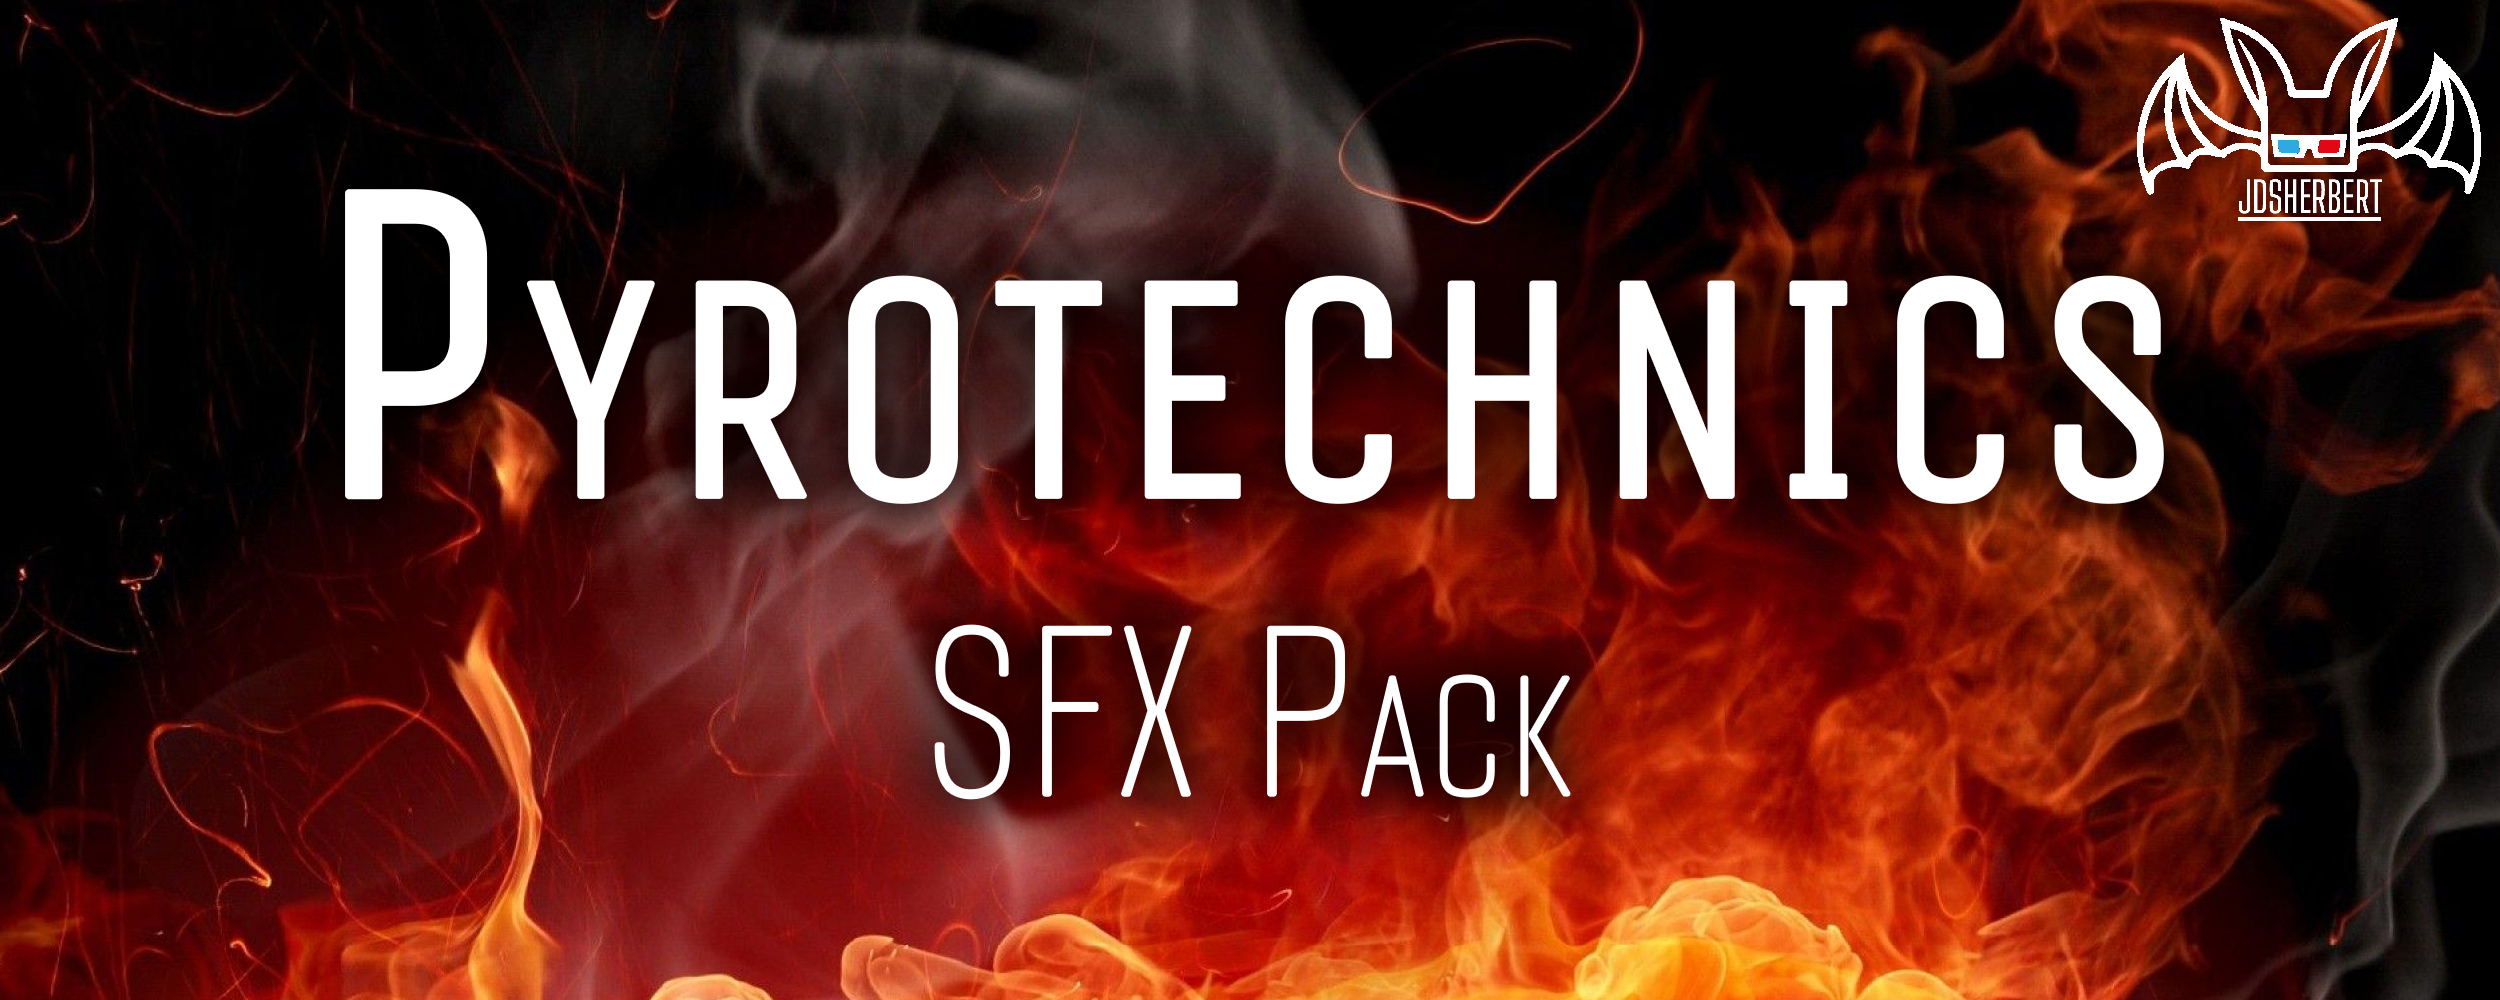 Pyrotechnics SFX Pack